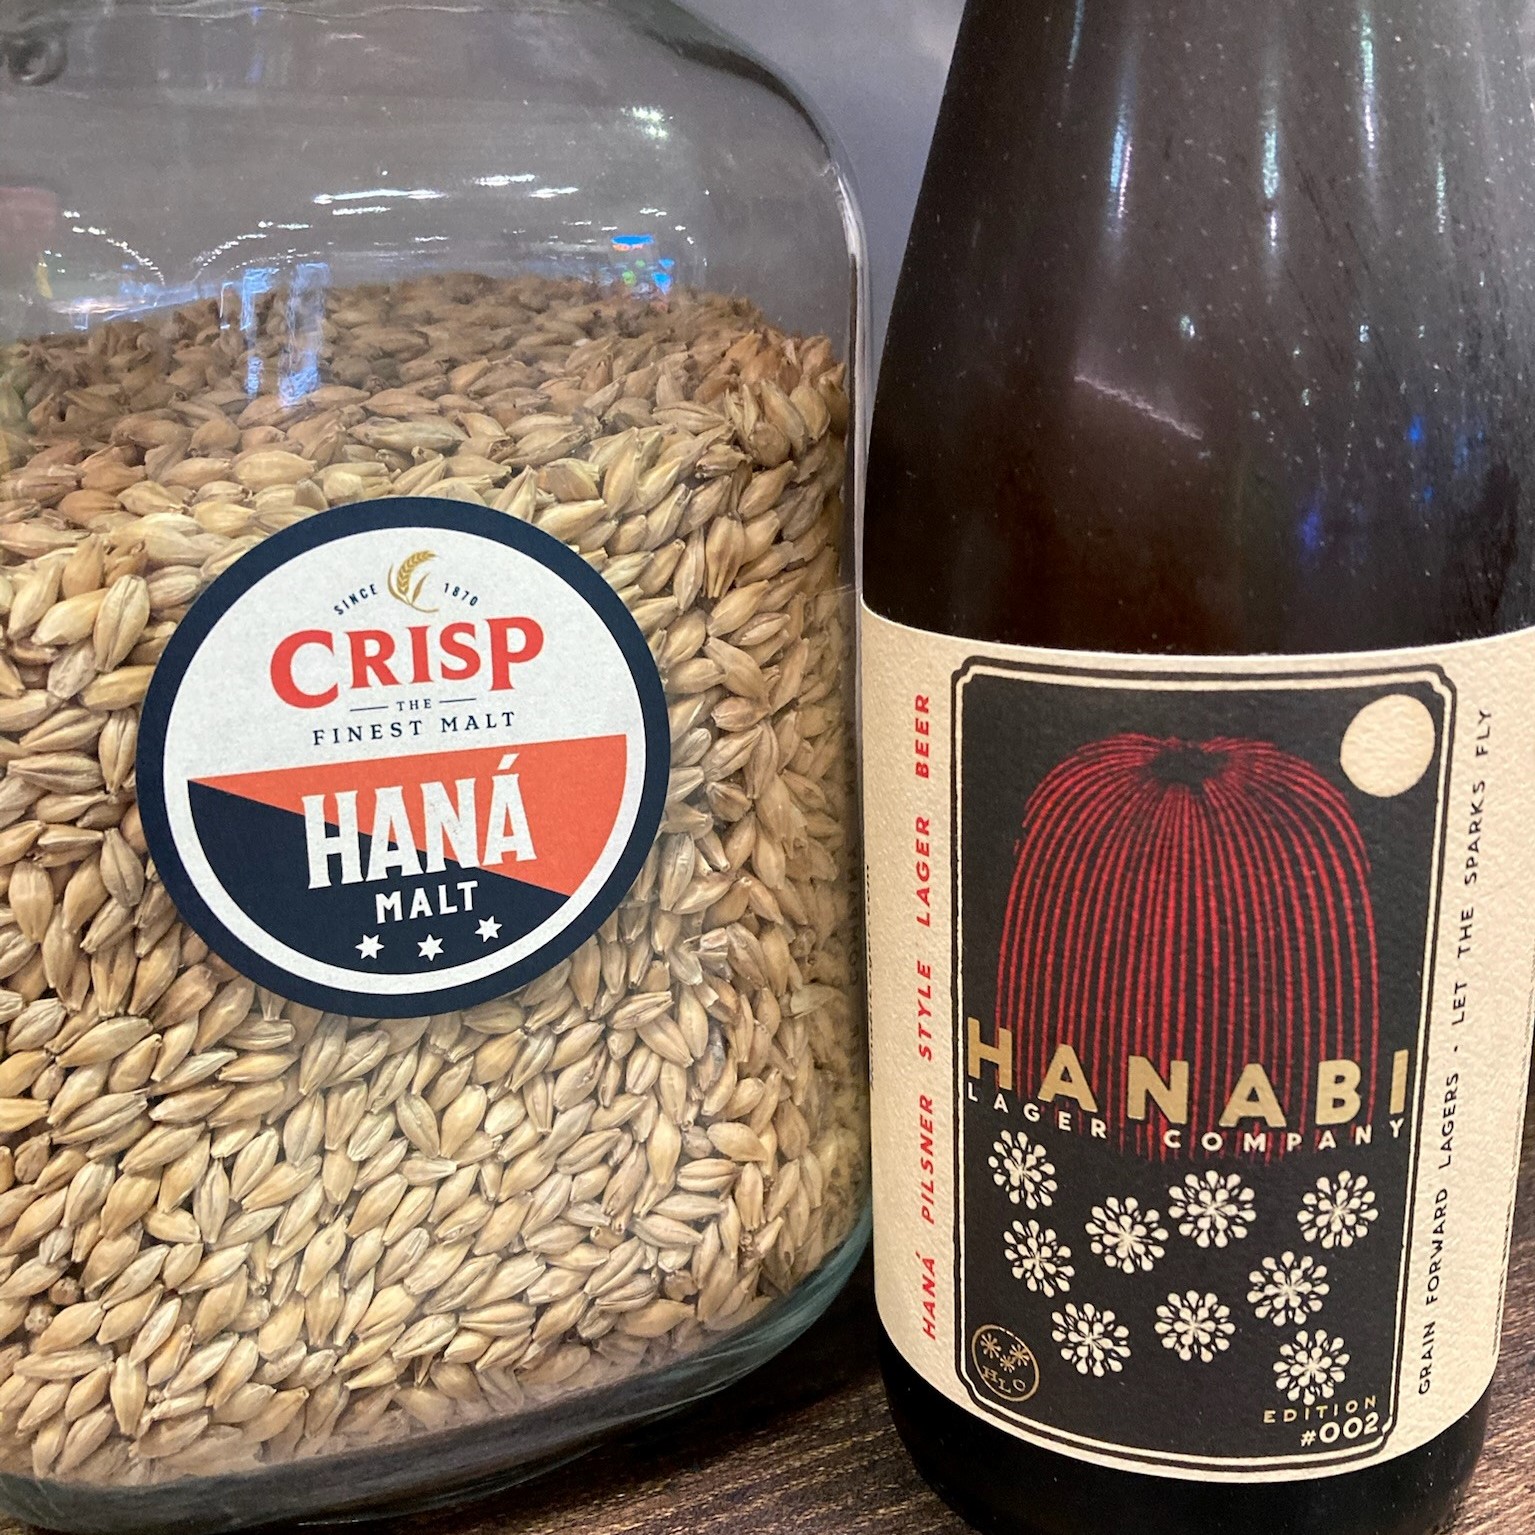 A. bag of heritage two-row barley grains, Hana malt and a bottle of Hanabi beer.